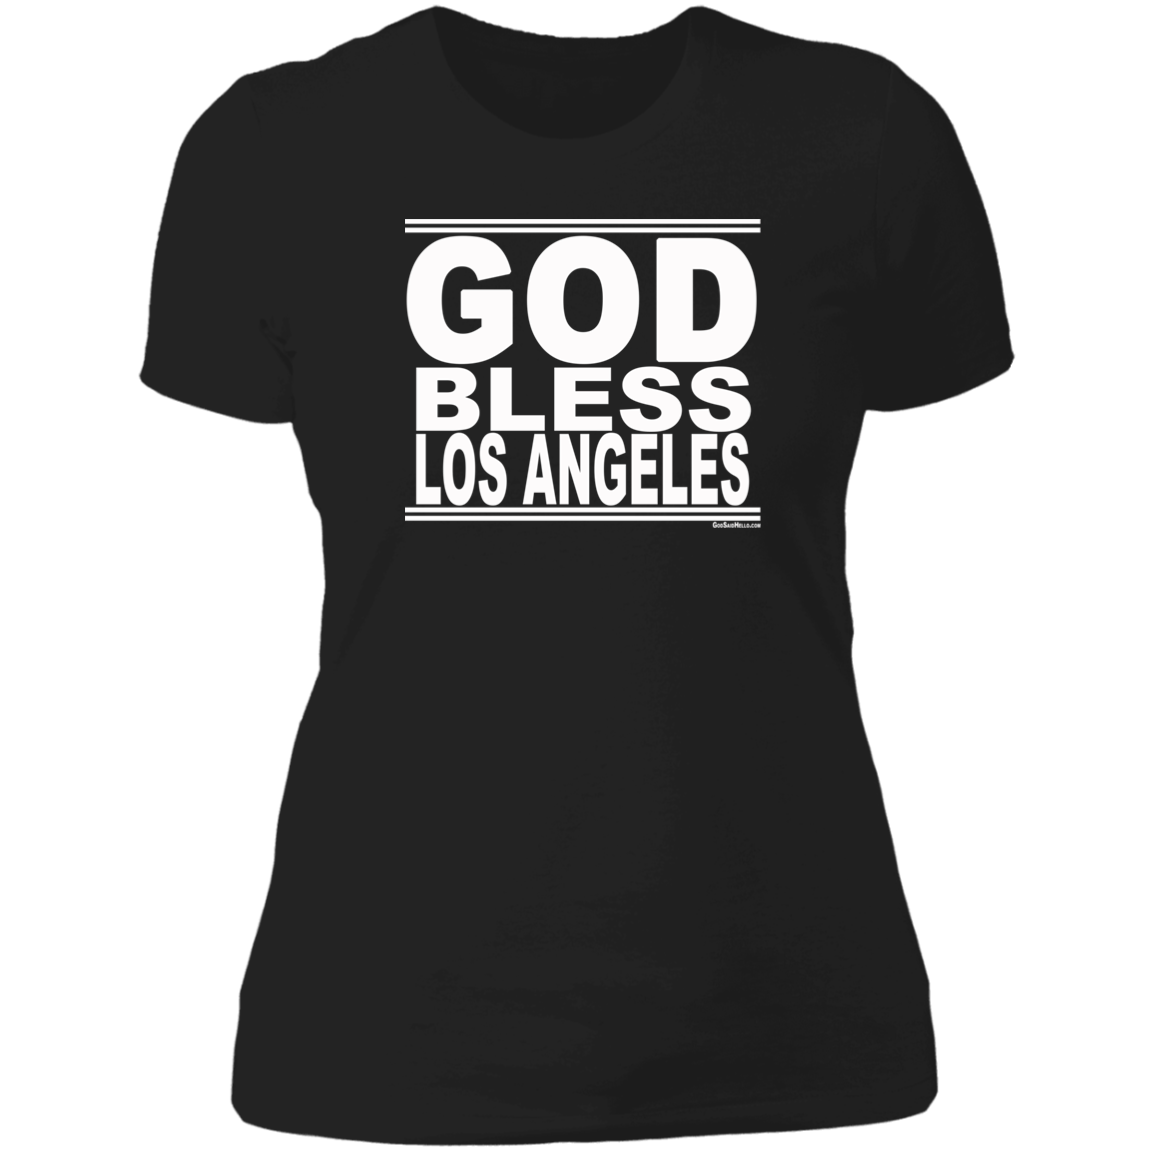 #GodBlessLosAngeles - Women's Shortsleeve Tee